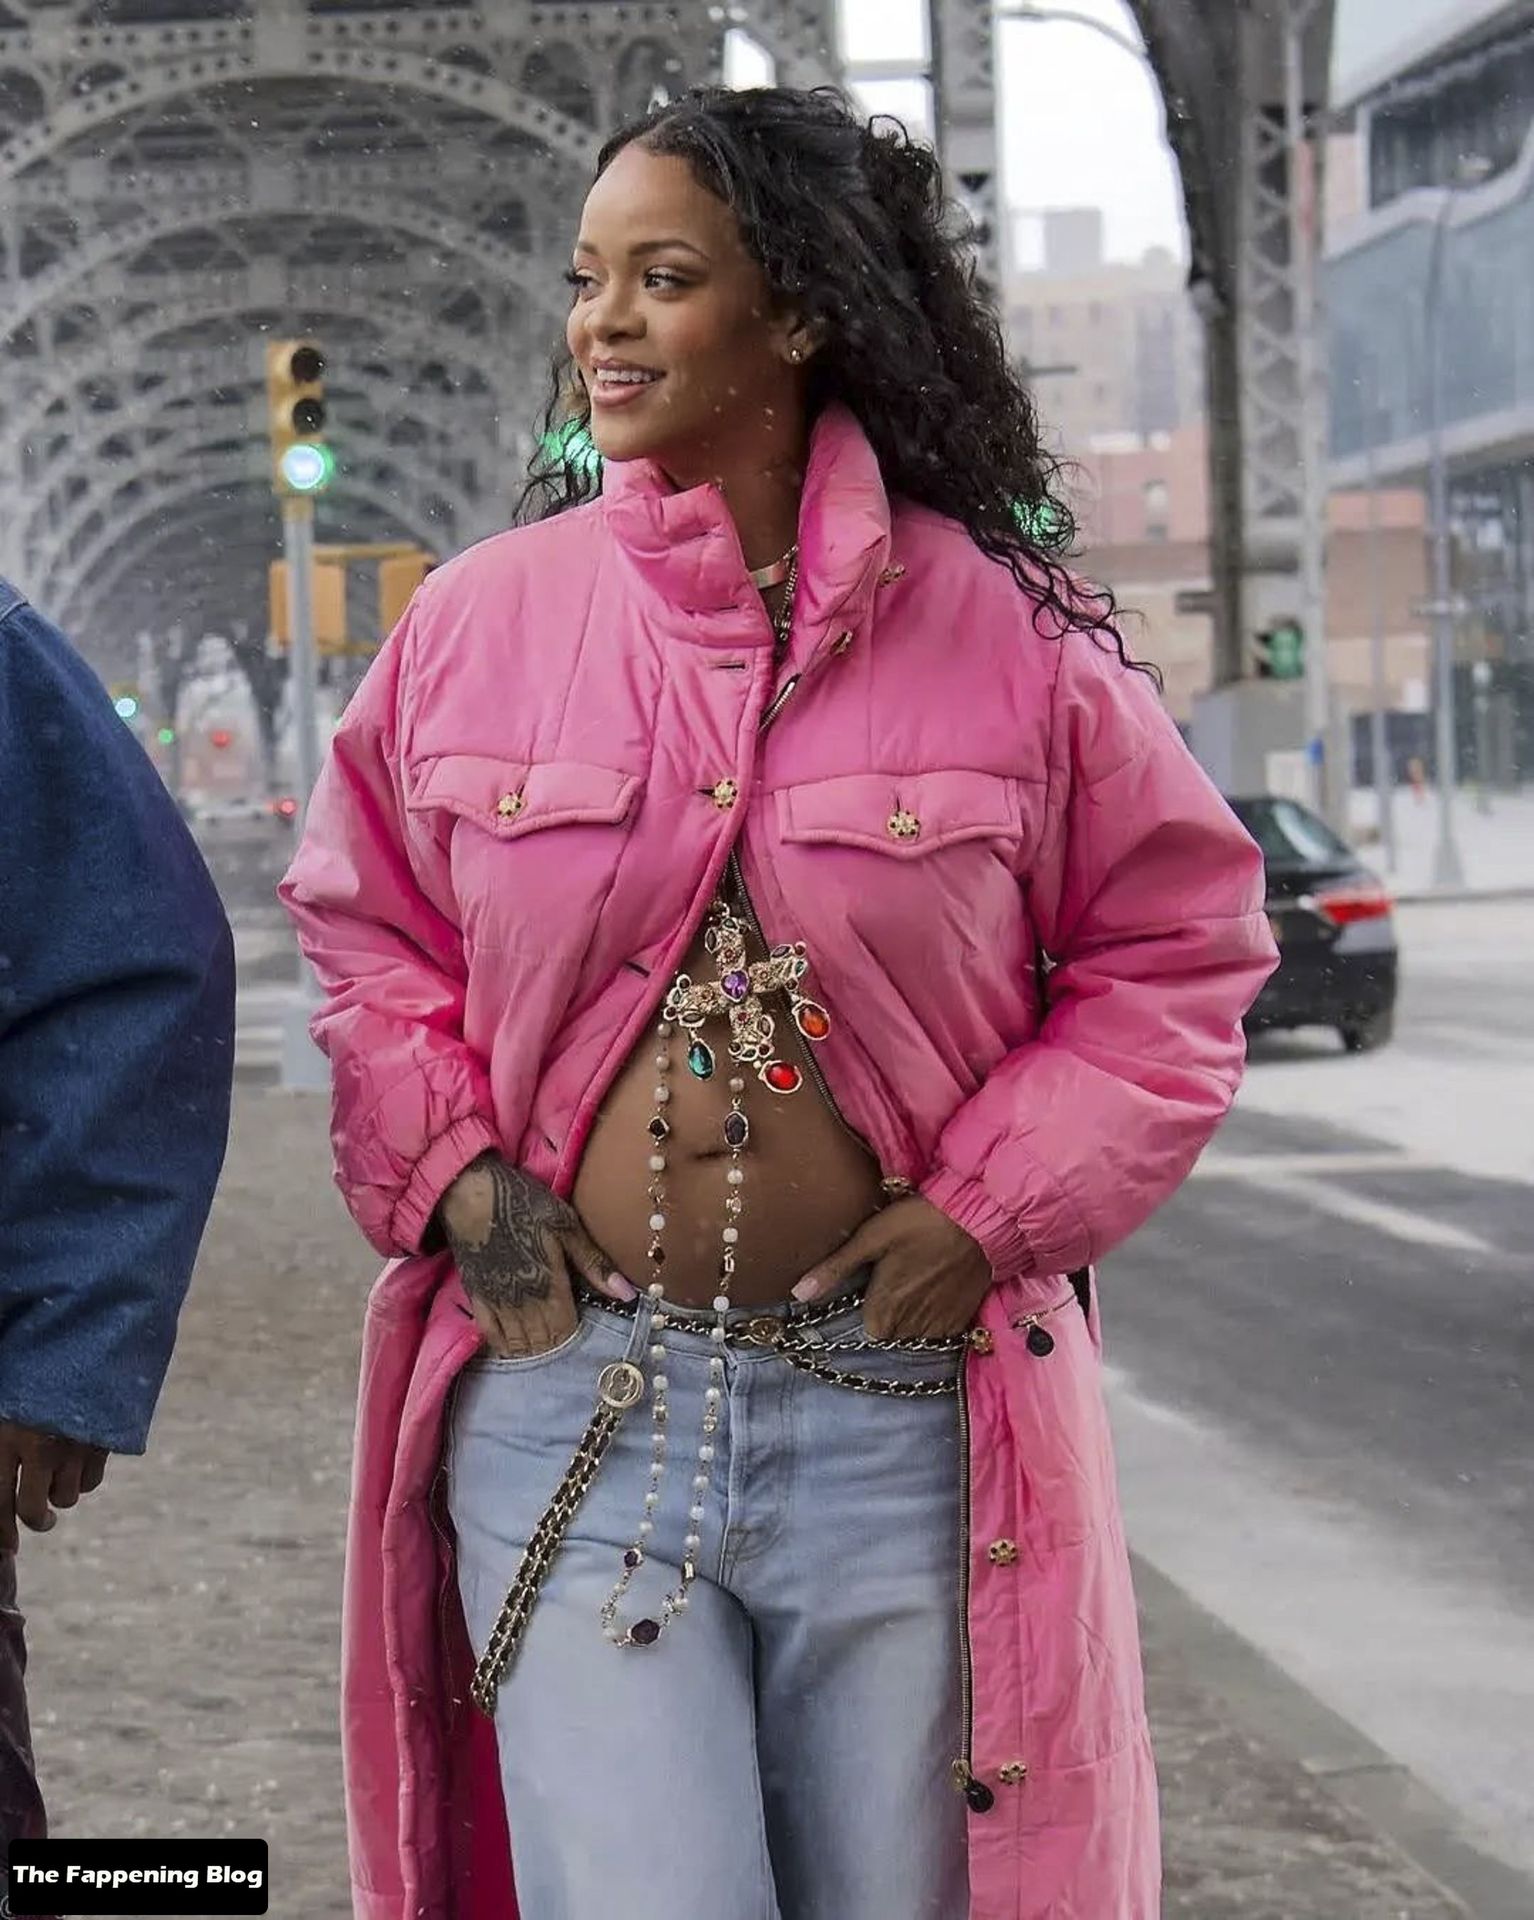 Rihanna-Sexy-Baby-Bump-The-Fappening-Blog-5.jpg